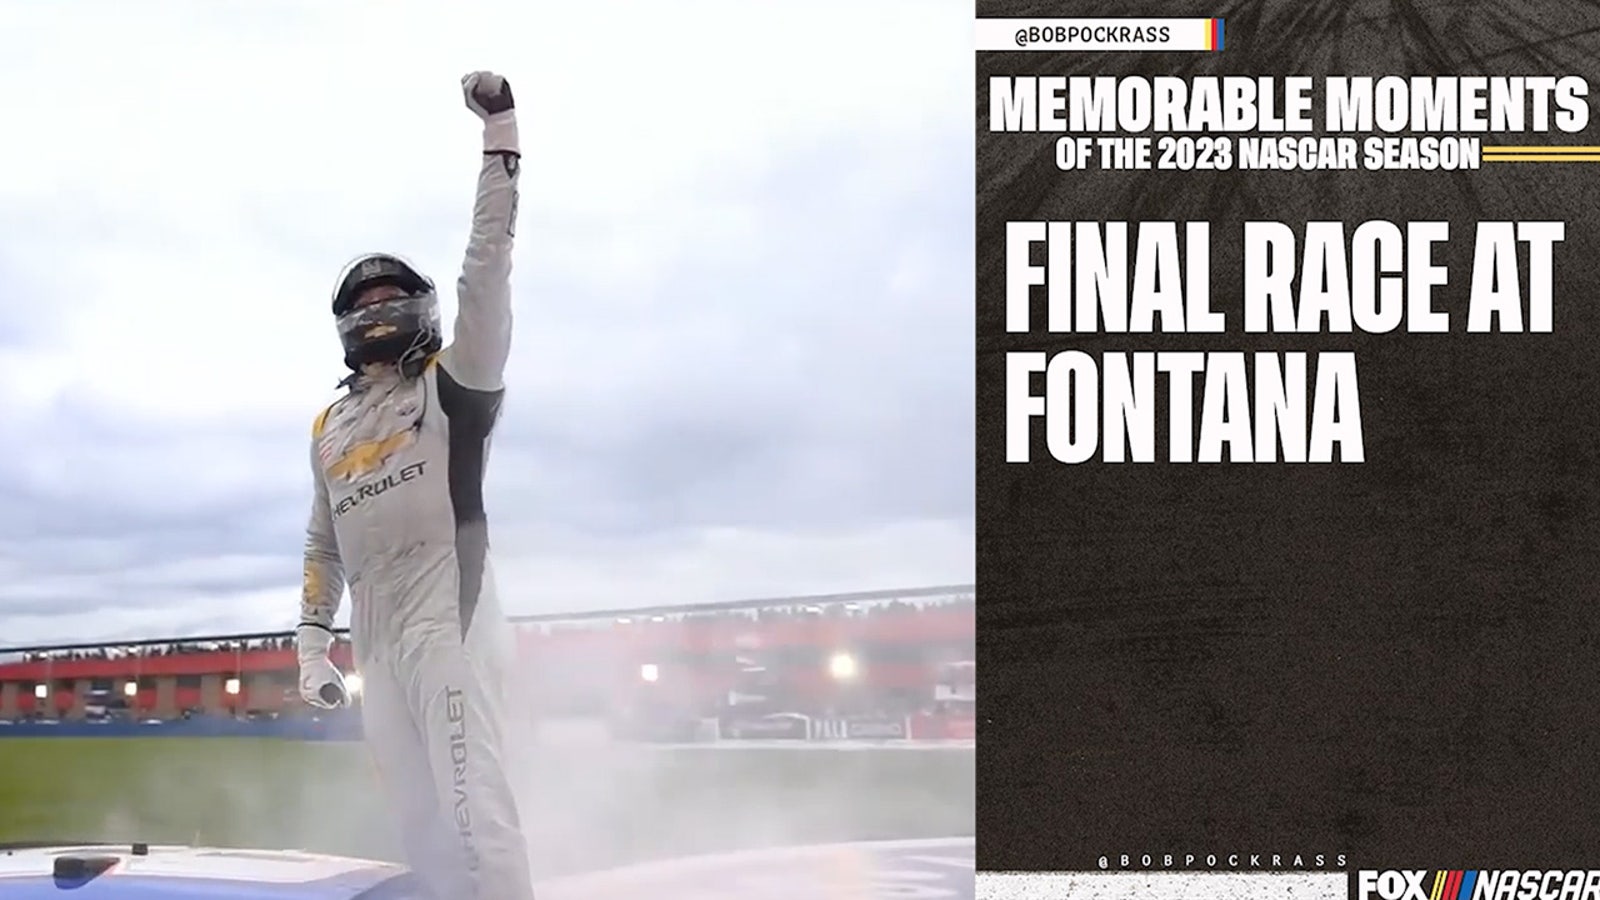 Final race at Fontana: Memorable Moments of the 2023 NASCAR Season